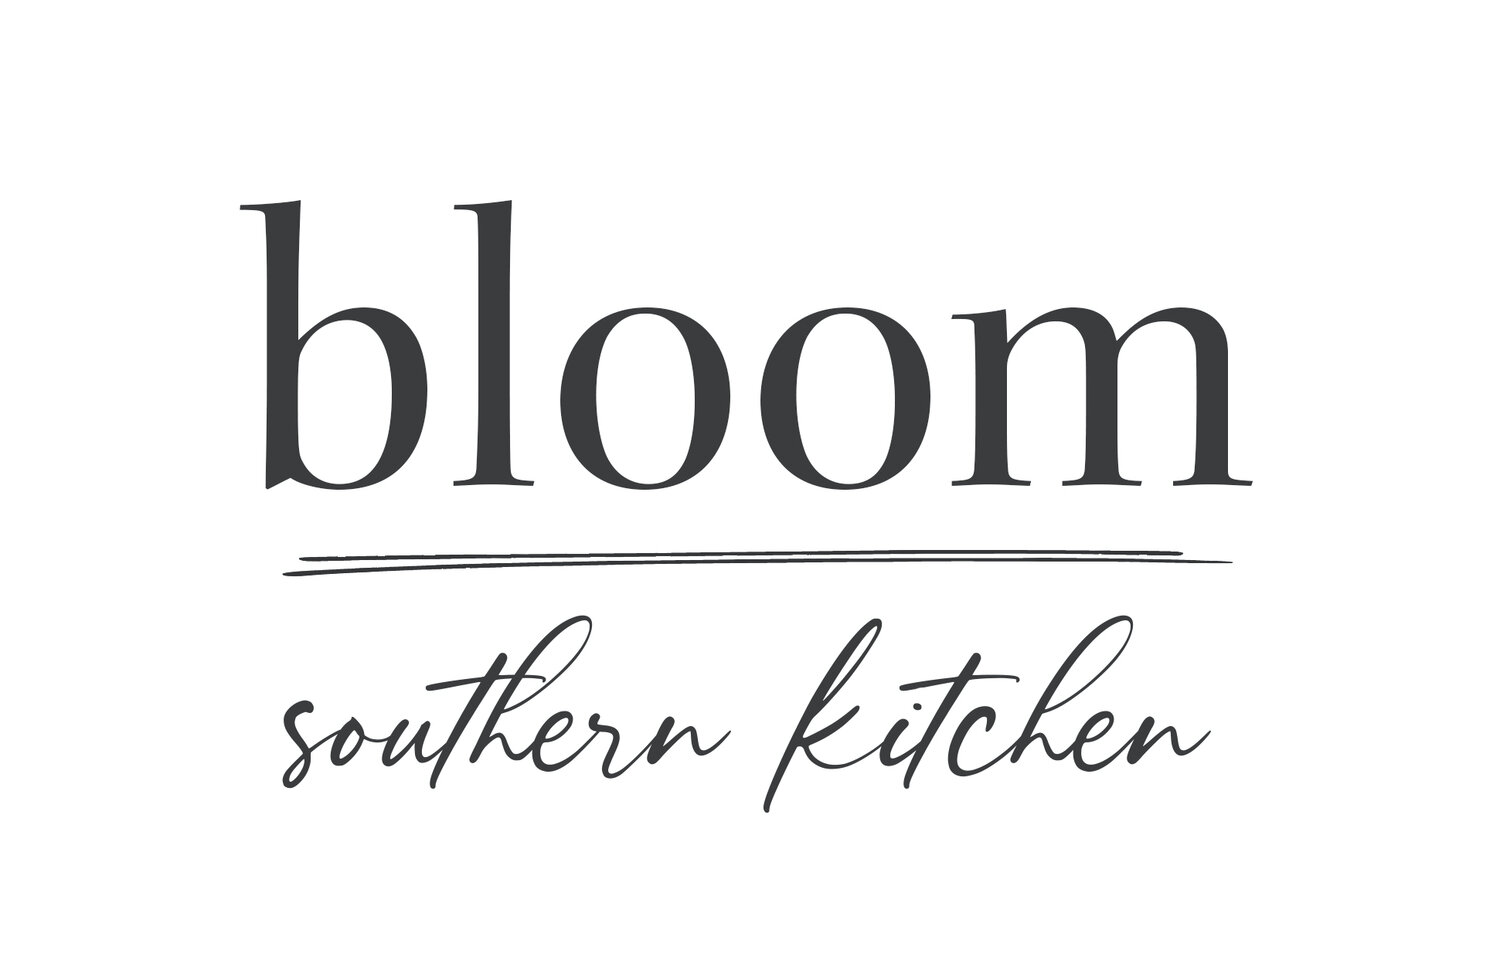 Bloom Southern Kitchen